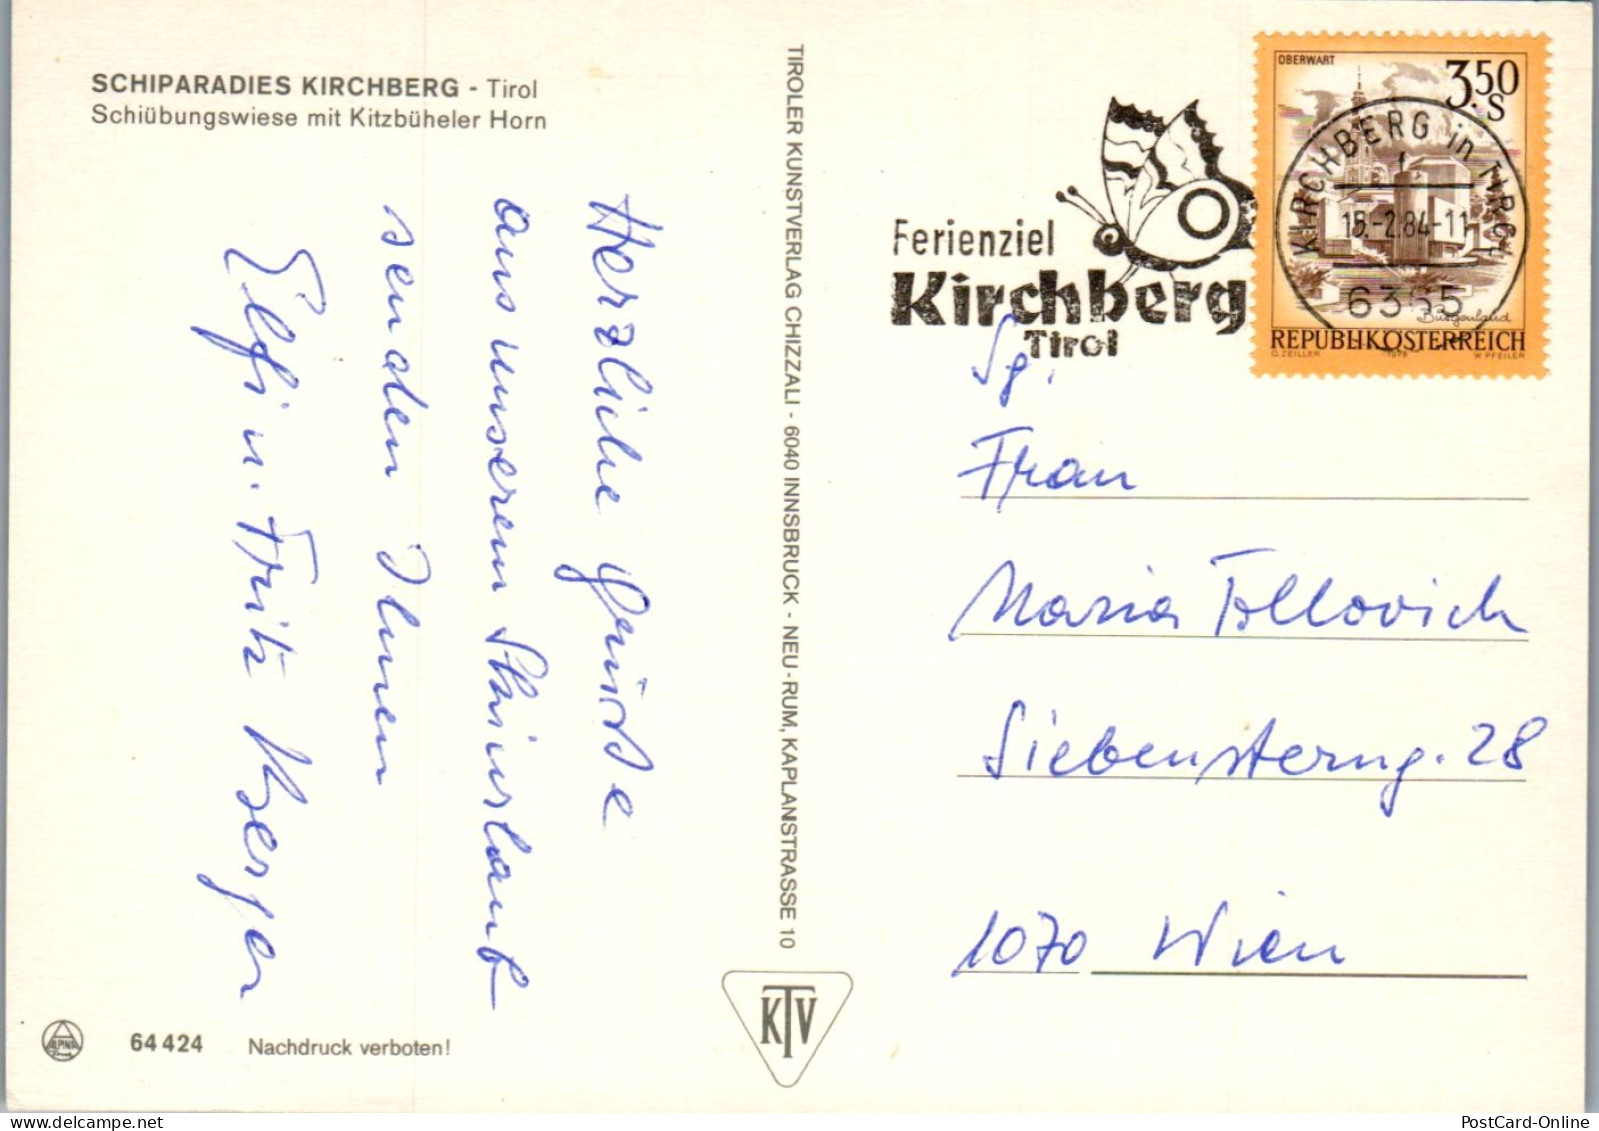 47560 - Tirol - Kirchberg , Skiübungswiese Mit Kitzbüheler Horn - Gelaufen 1984 - Kirchberg